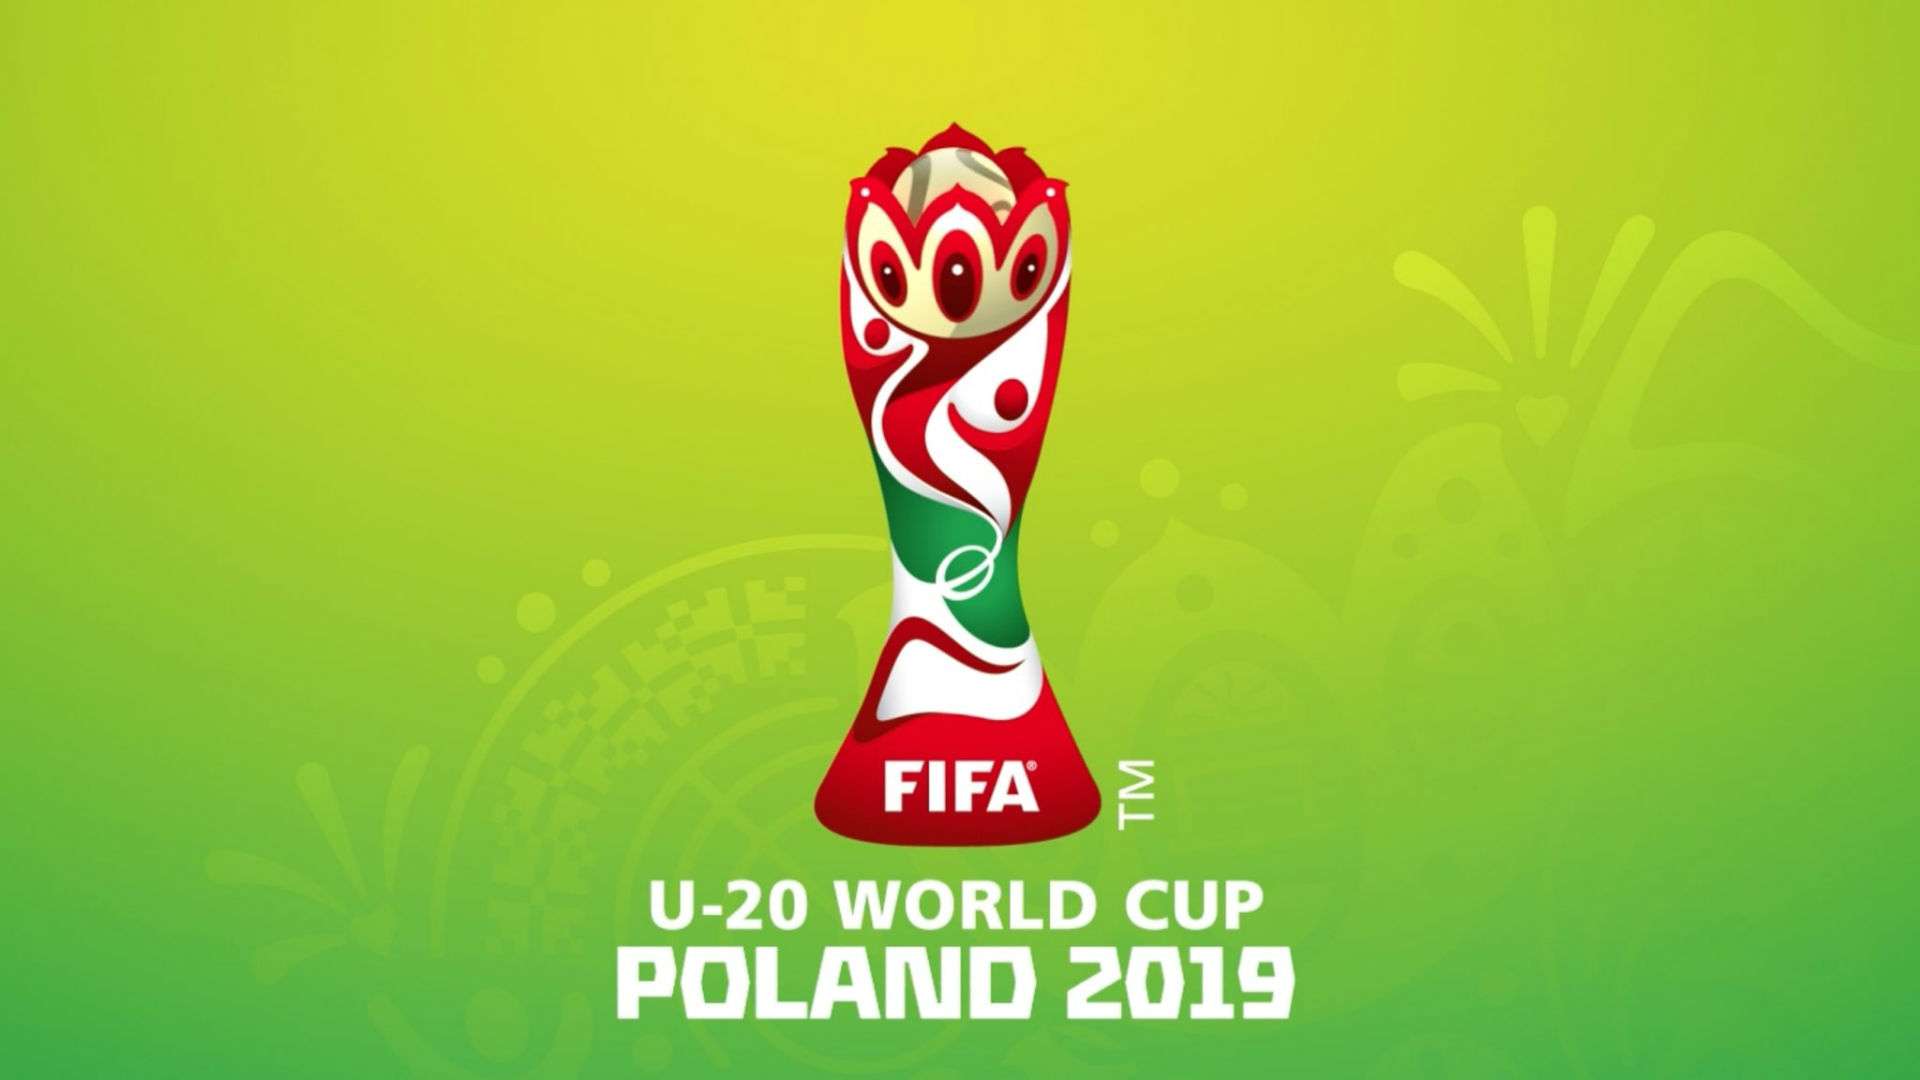 Fifa U20 World Cup logo